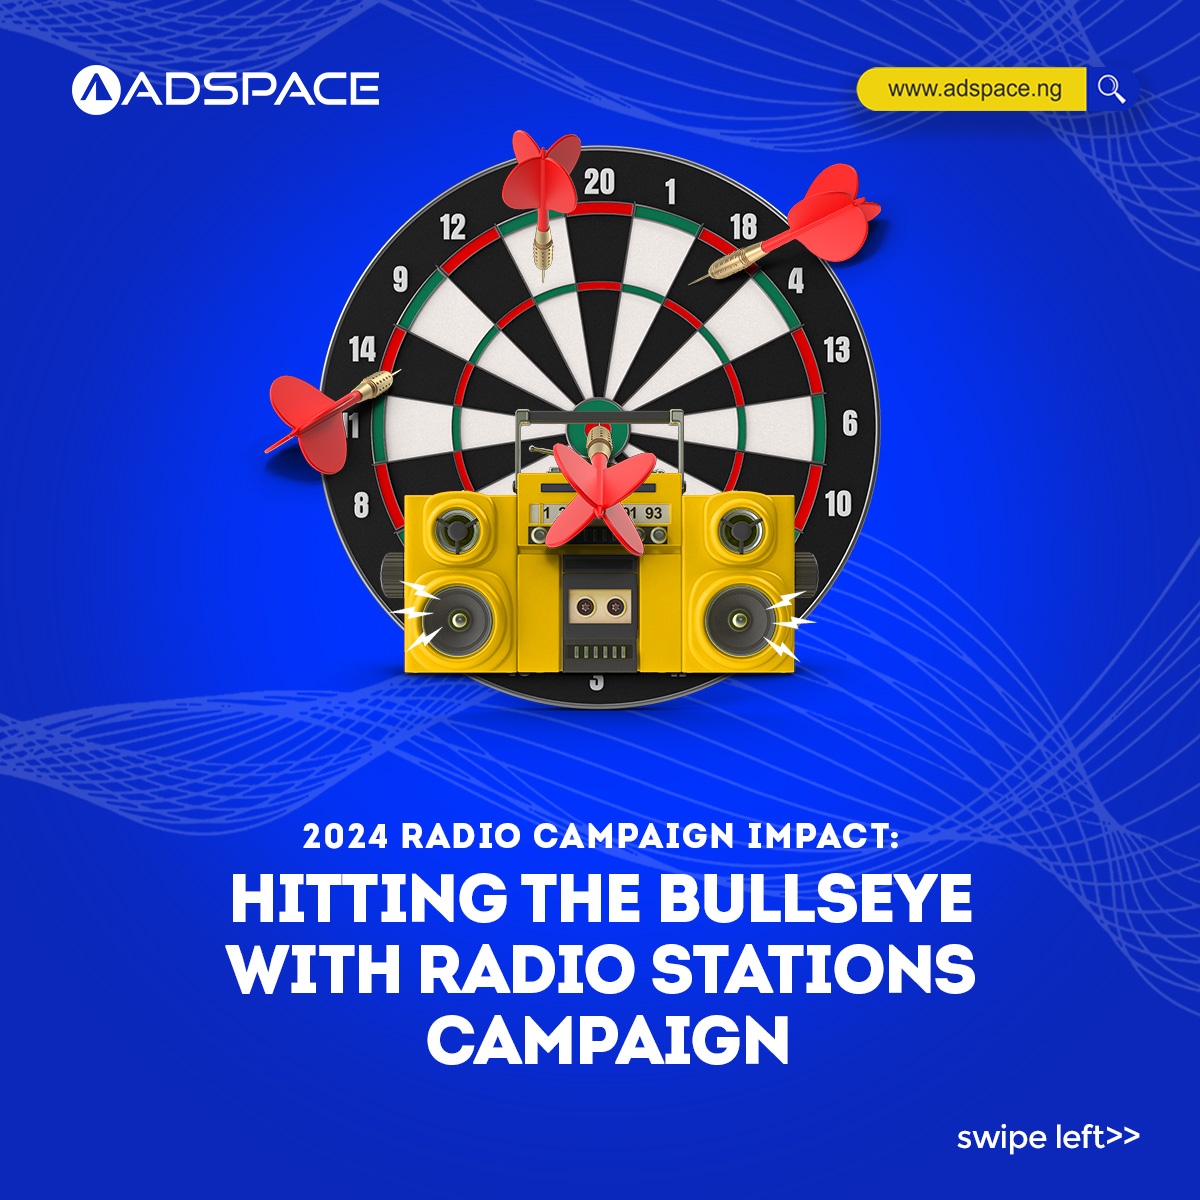 Campaign Impact